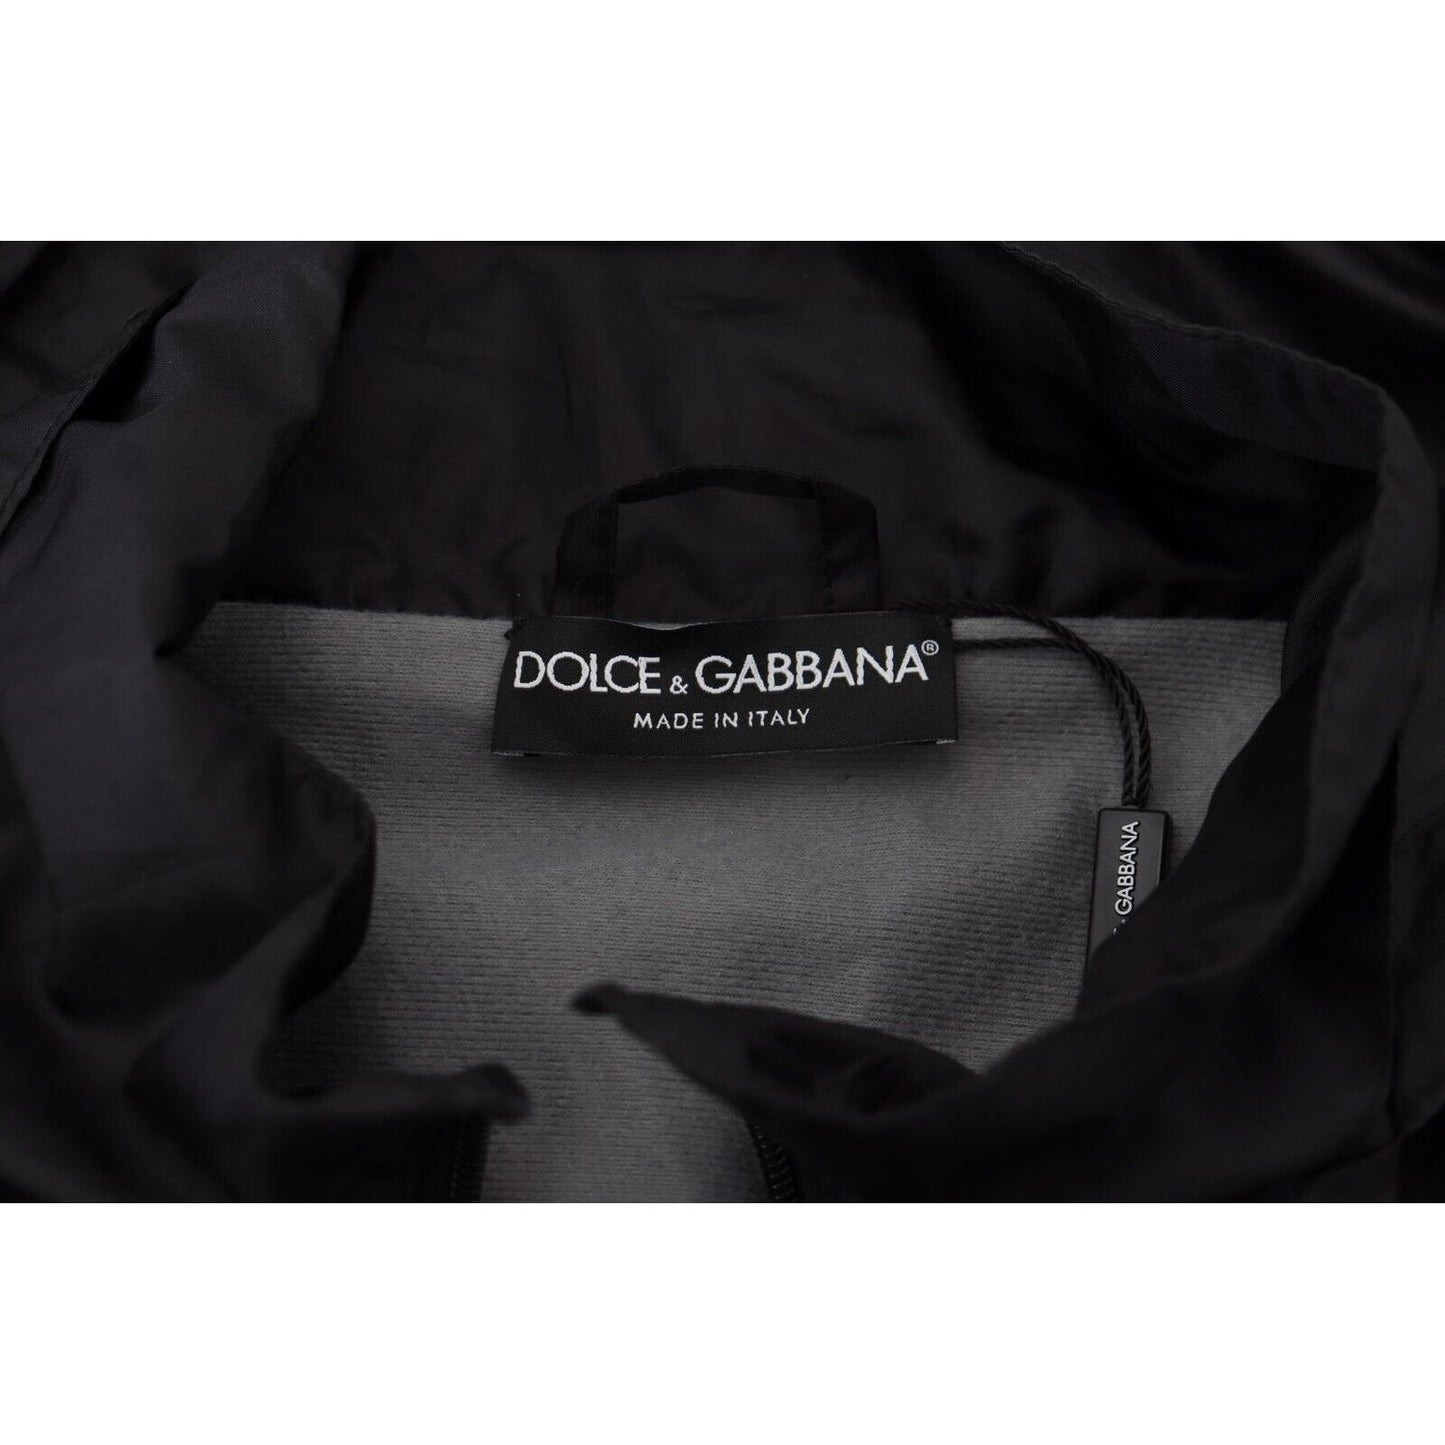 Dolce & GabbanaSleek Black Nylon Bomber JacketMcRichard Designer Brands£629.00